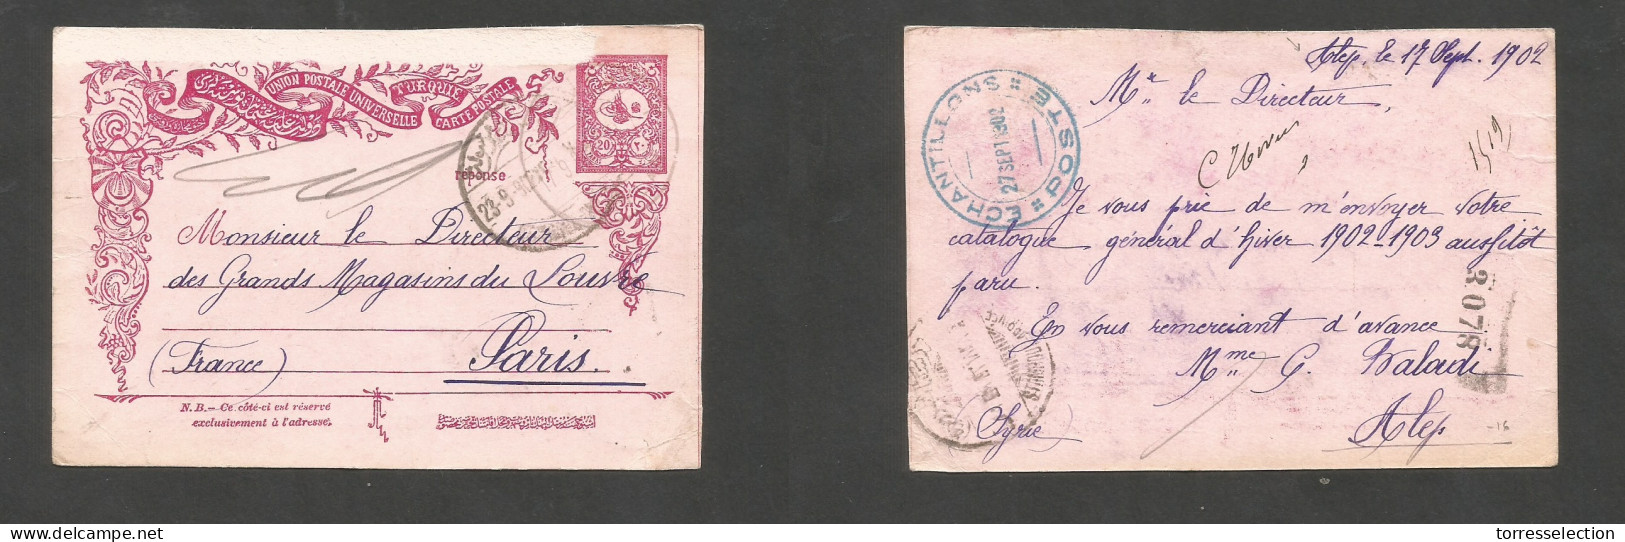 PERSIA. 1902 (17 Sept) Turkish PO Alep - France, Paris (27 Sept) 20 Para Red / Pink Stat Card Bilingual Cachet. SALE. - Irán